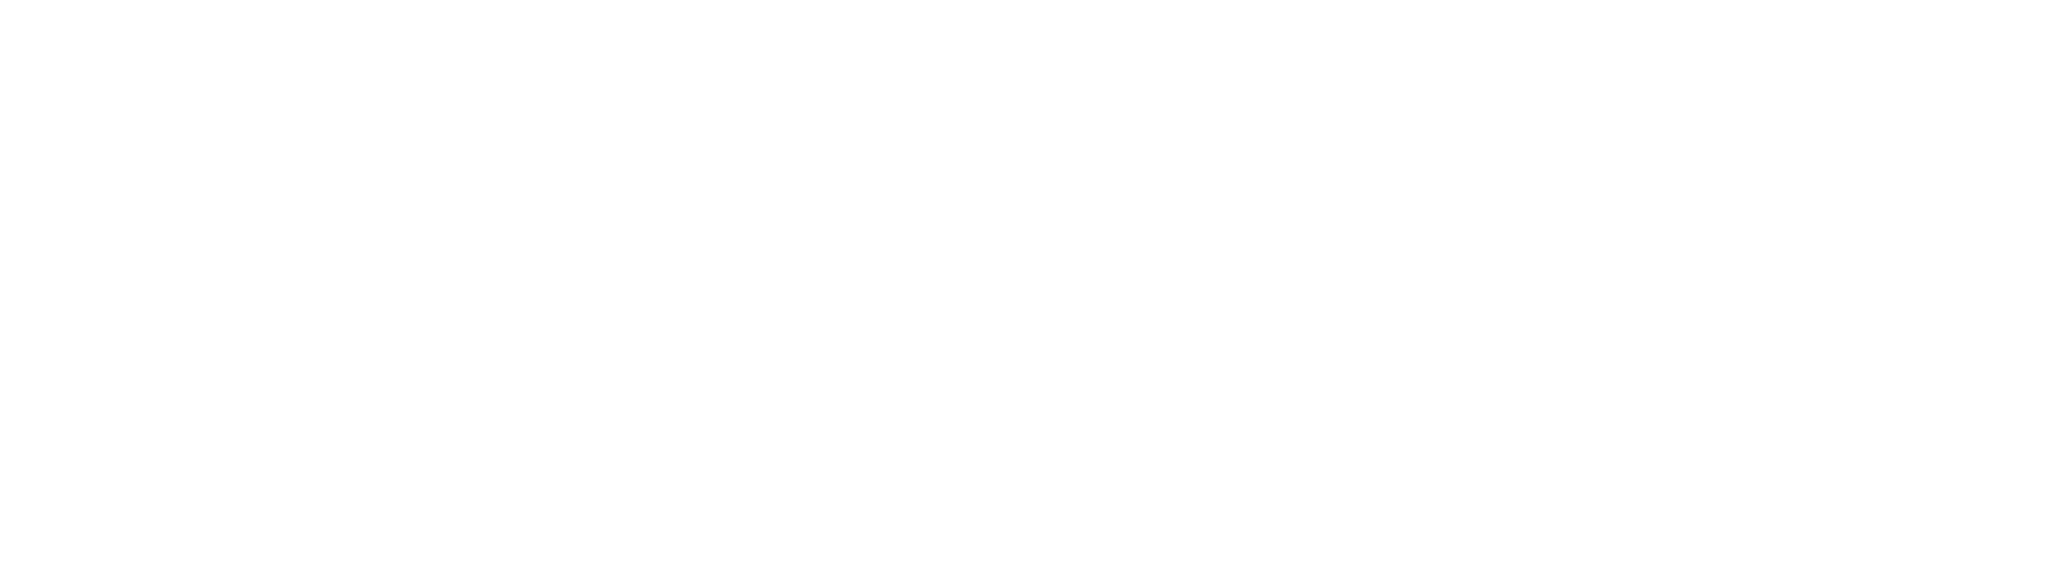 Home Instead logo